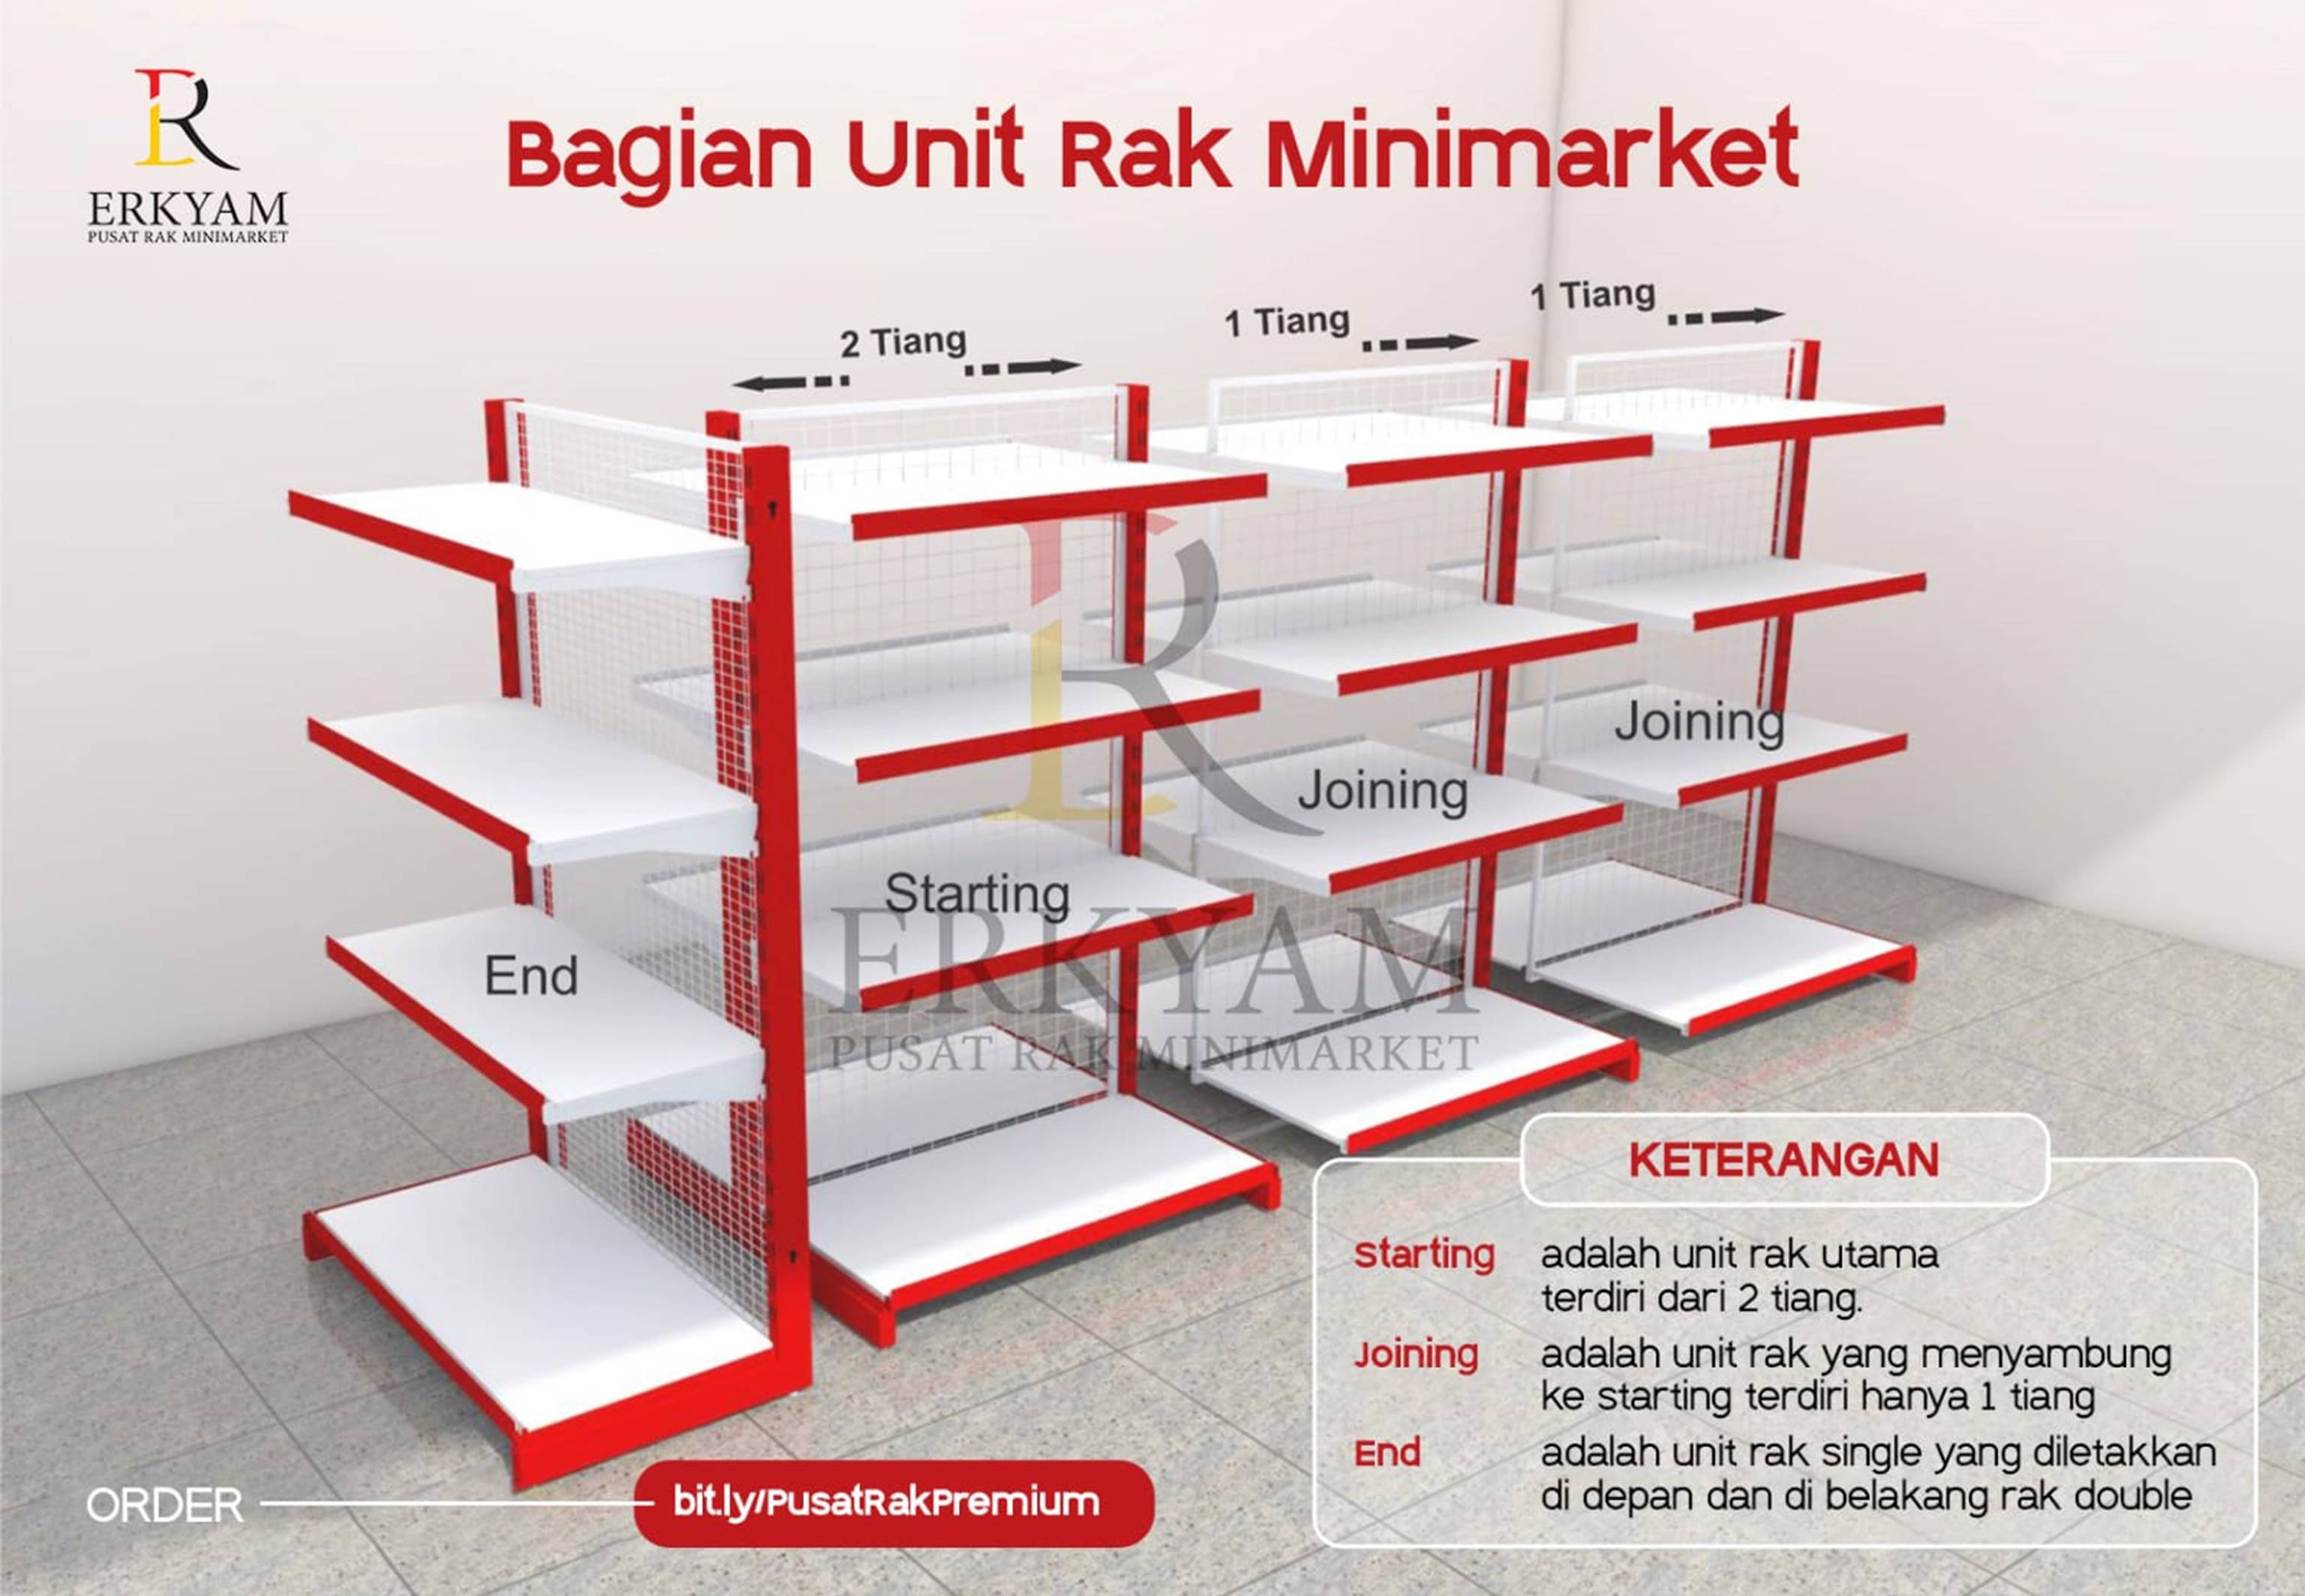 ERKYAM Sentra Rak Minimarket area Sambas Kalimantan Barat